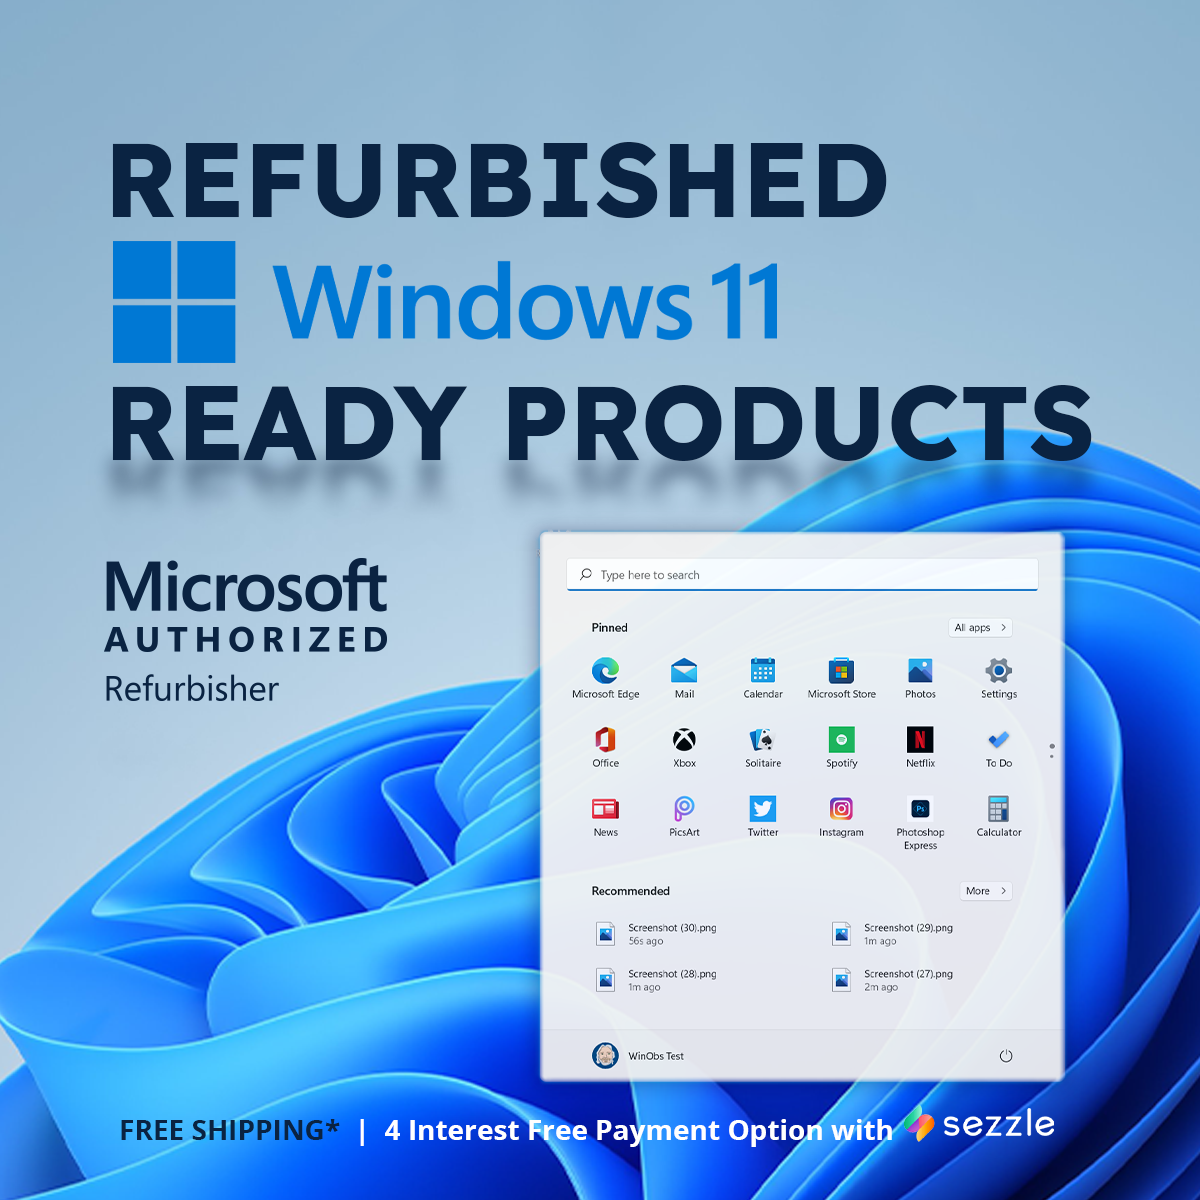 Windows 11 Ready Computers at REFURB.io